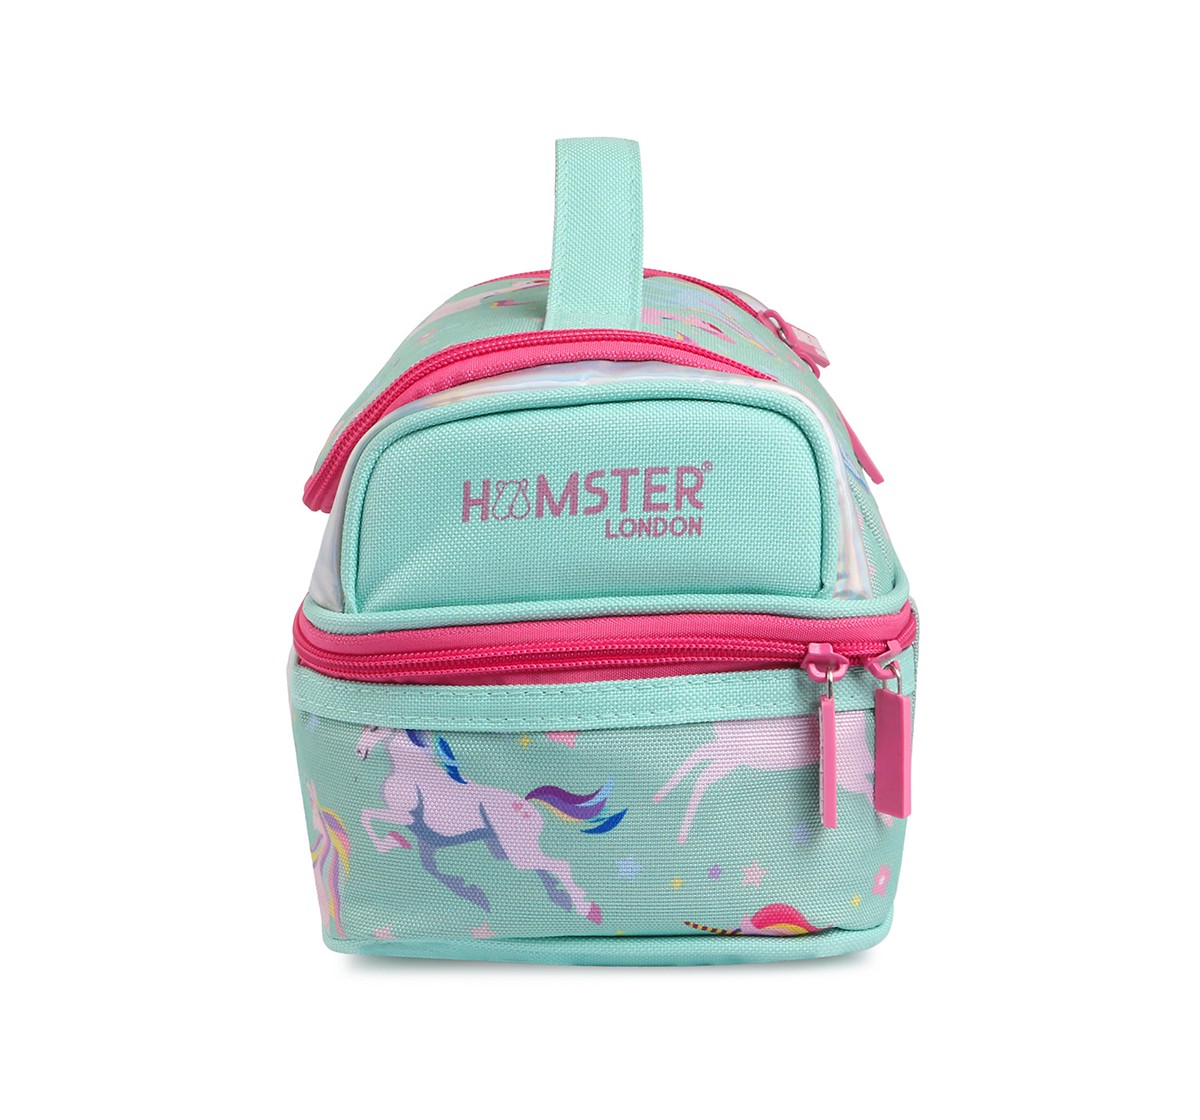 Hamster London Unicorn Double Zipper Pencil Case for Kids age 3Y+ (Pink)